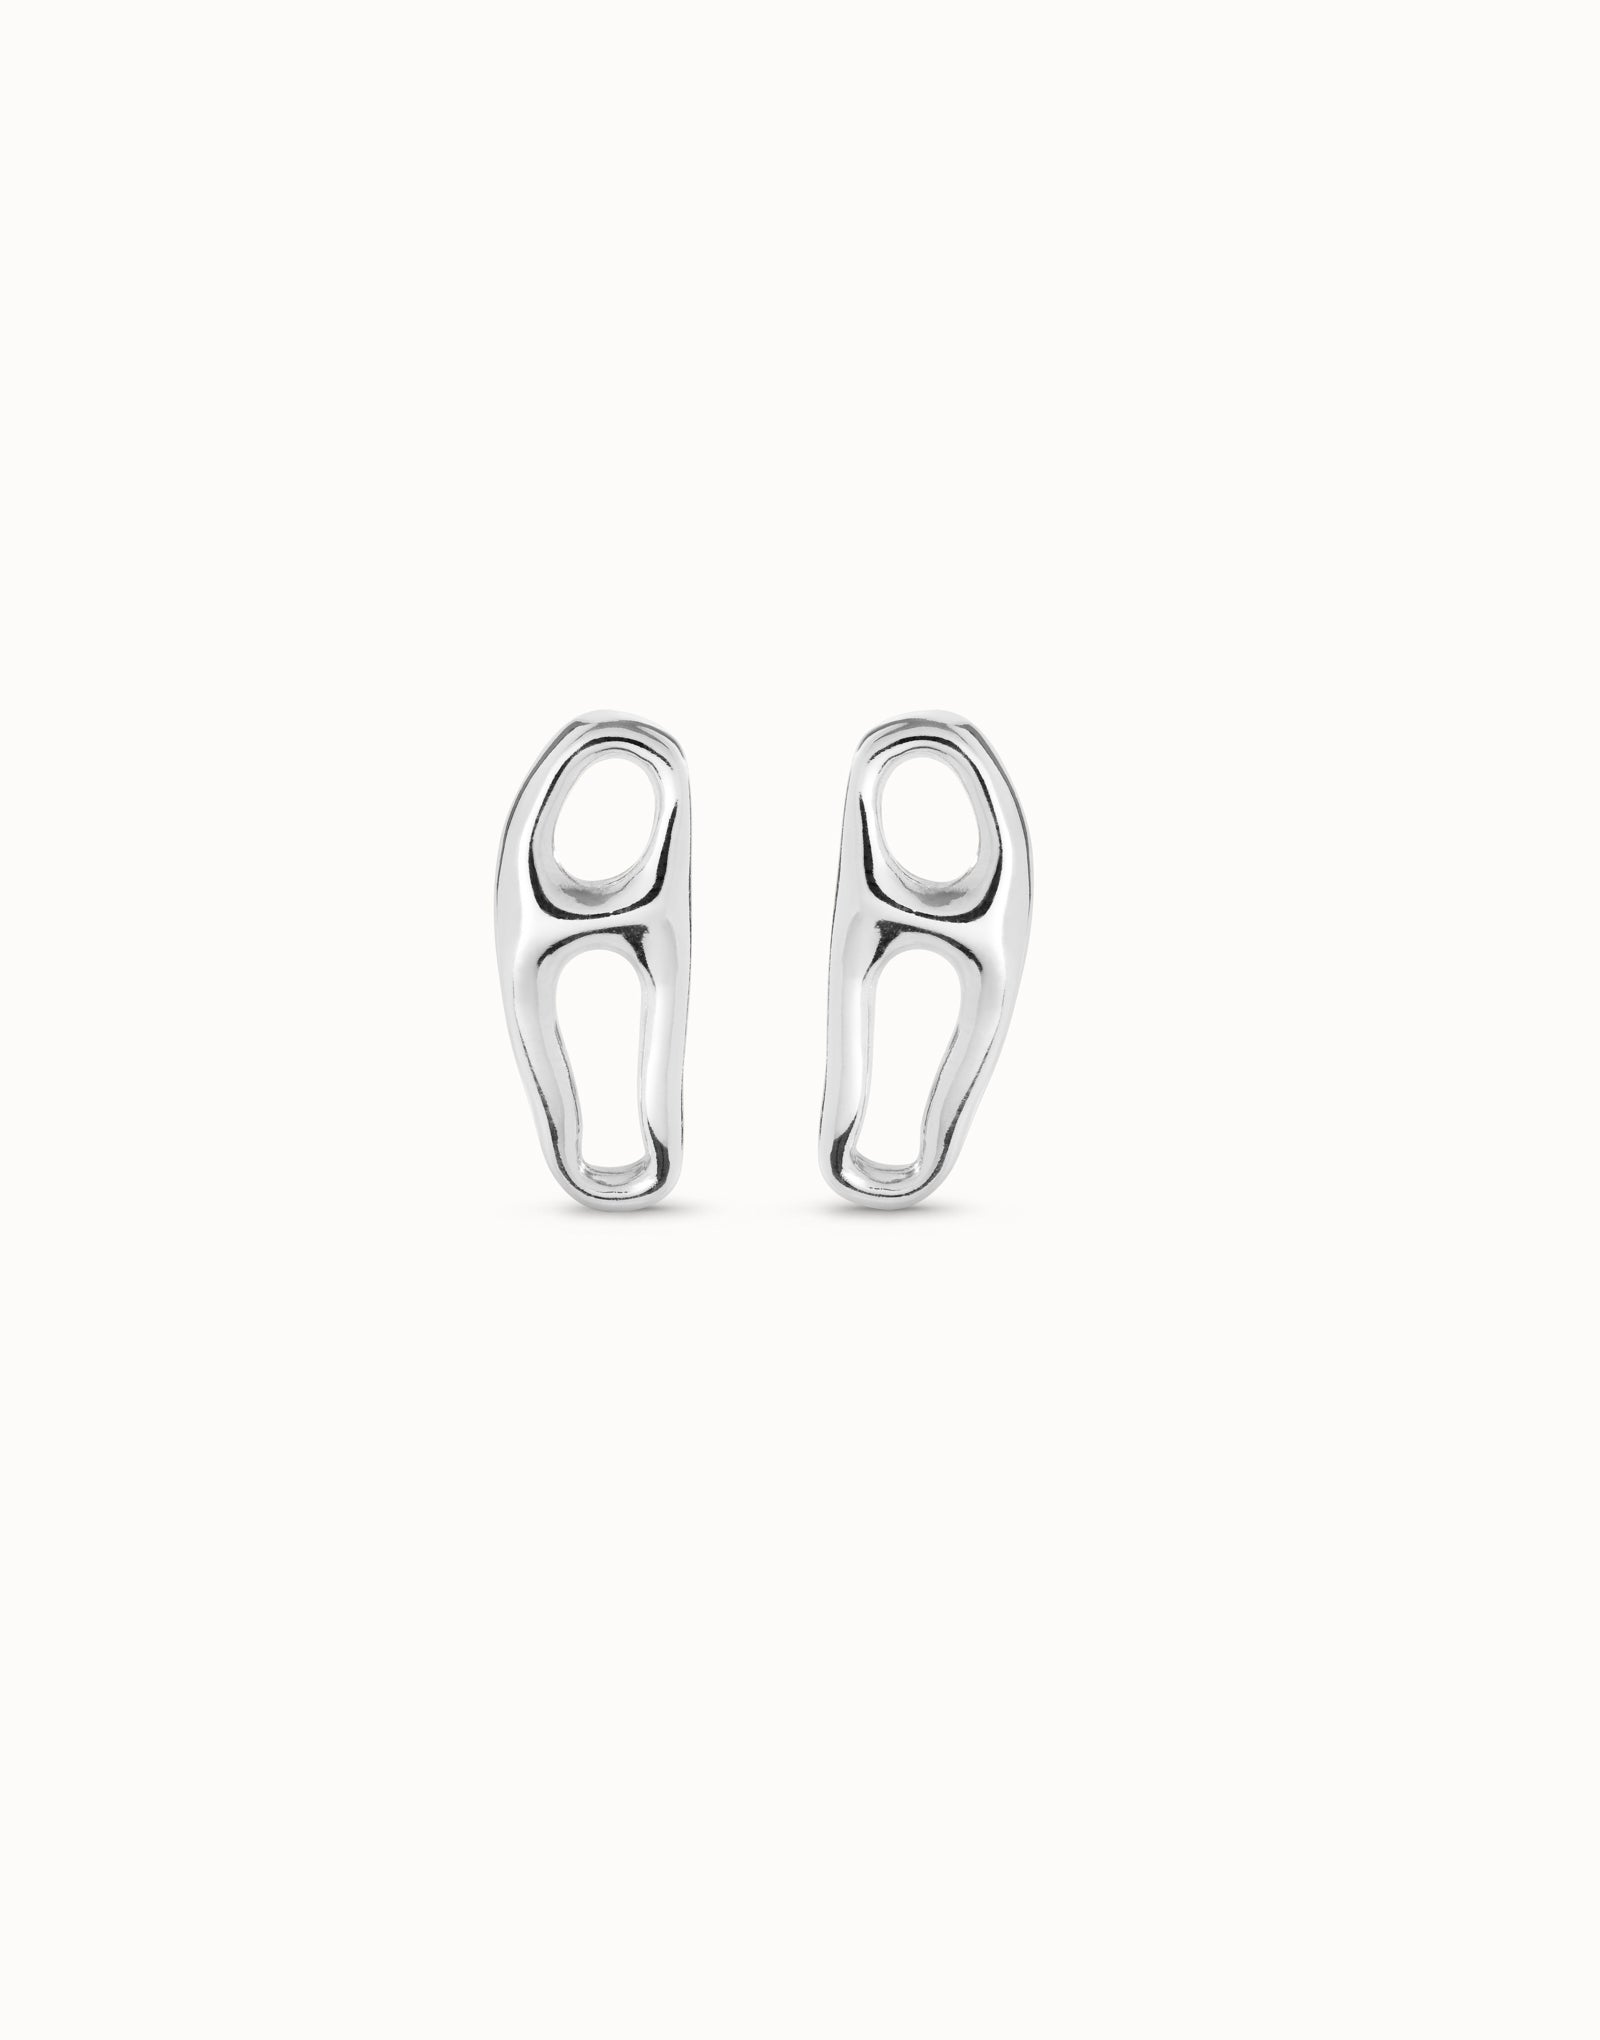 Cheerful Earrings | Uno de 50 | Luby 